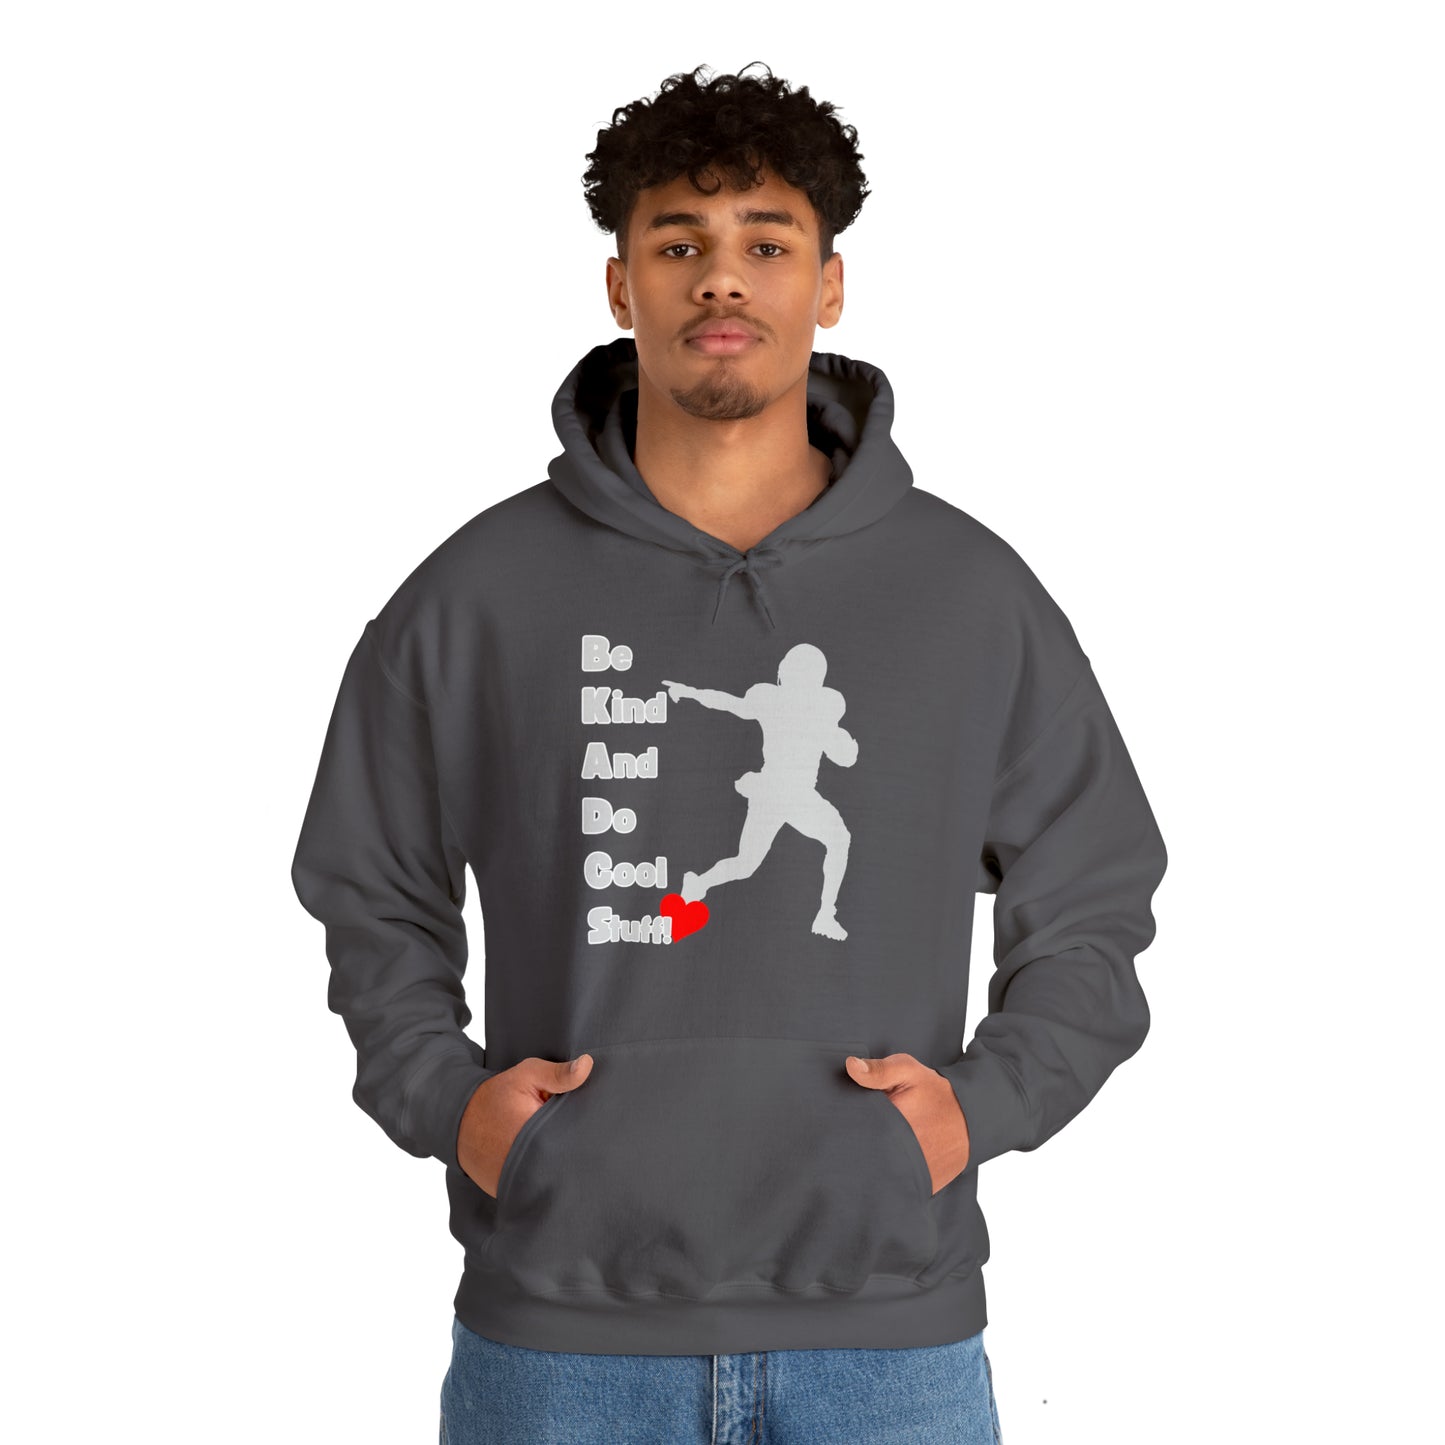 Be Kind And Do Cool Stuff - Football - Unisex Heavy Blend™ Hooded Sweatshirt